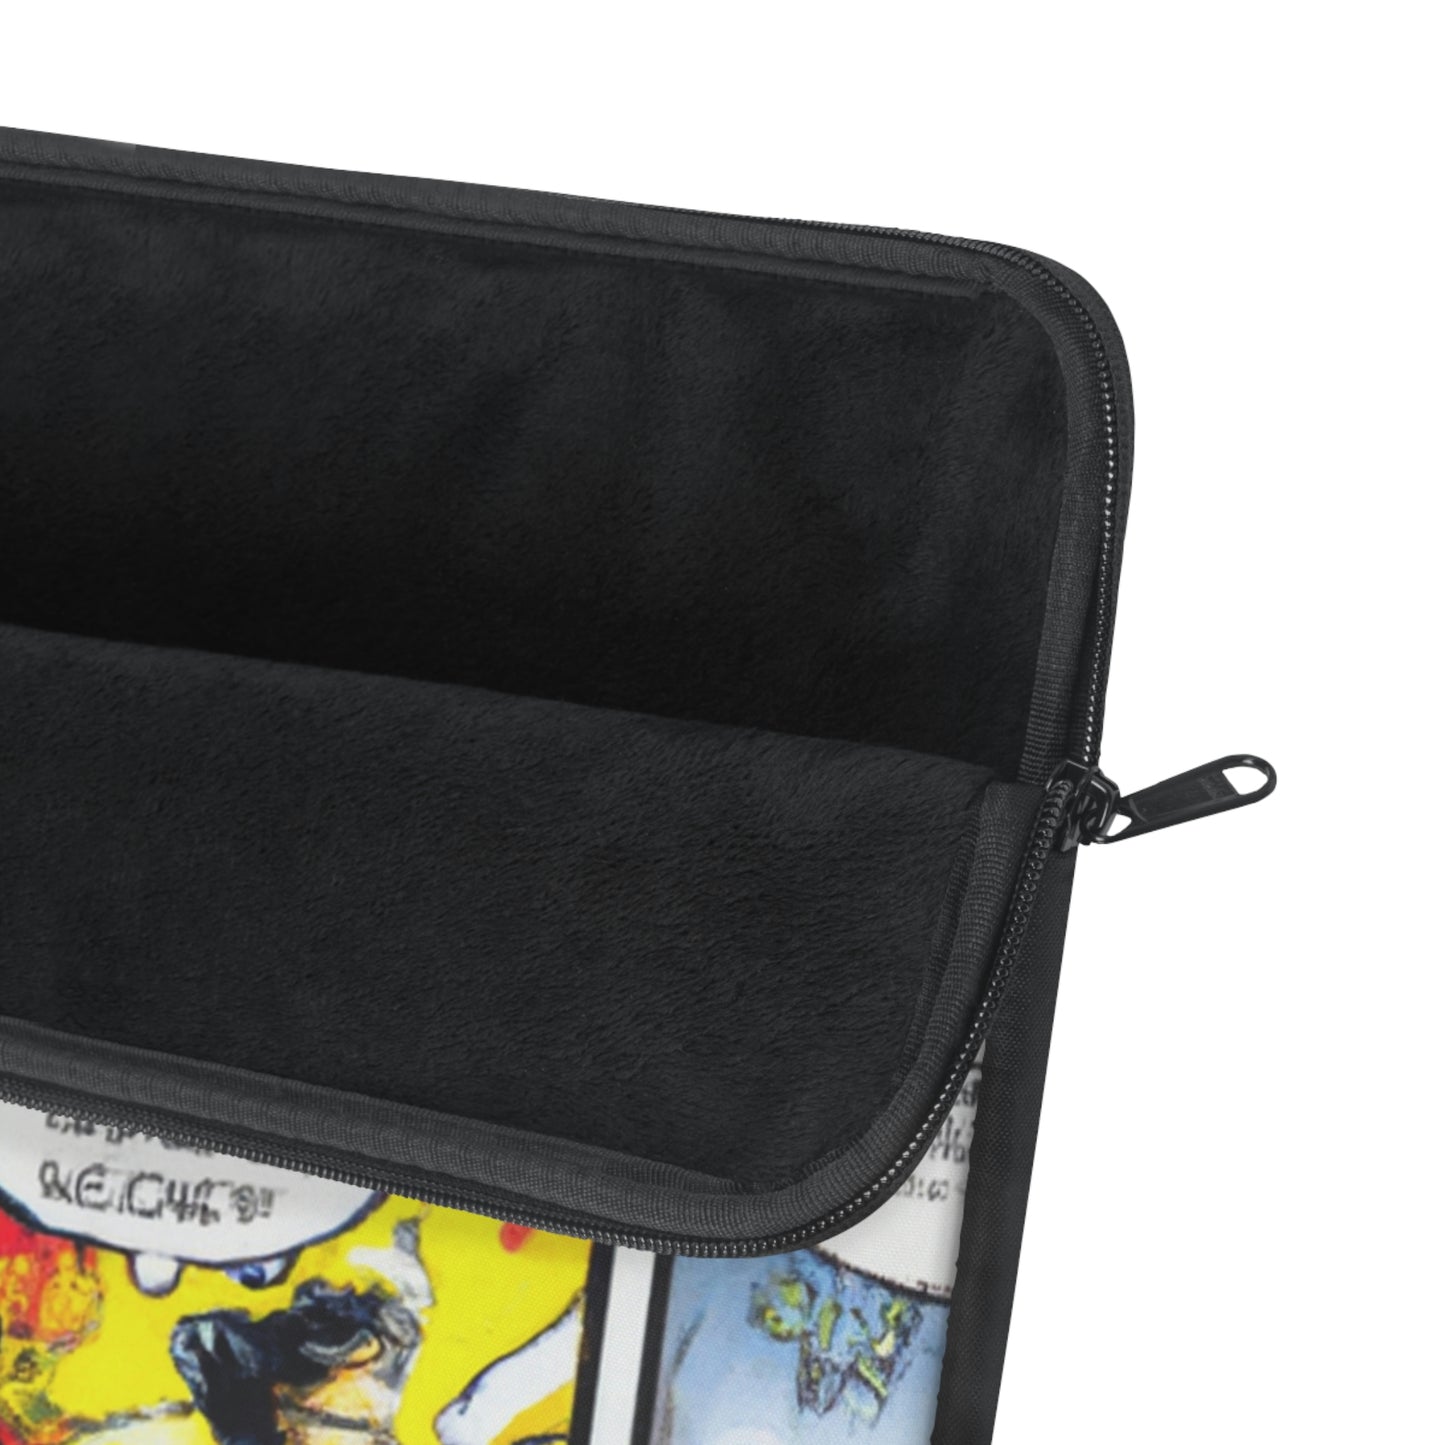 Rocky Robotnik - Comic Book Collector Laptop Computer Sleeve Storage Case Bag